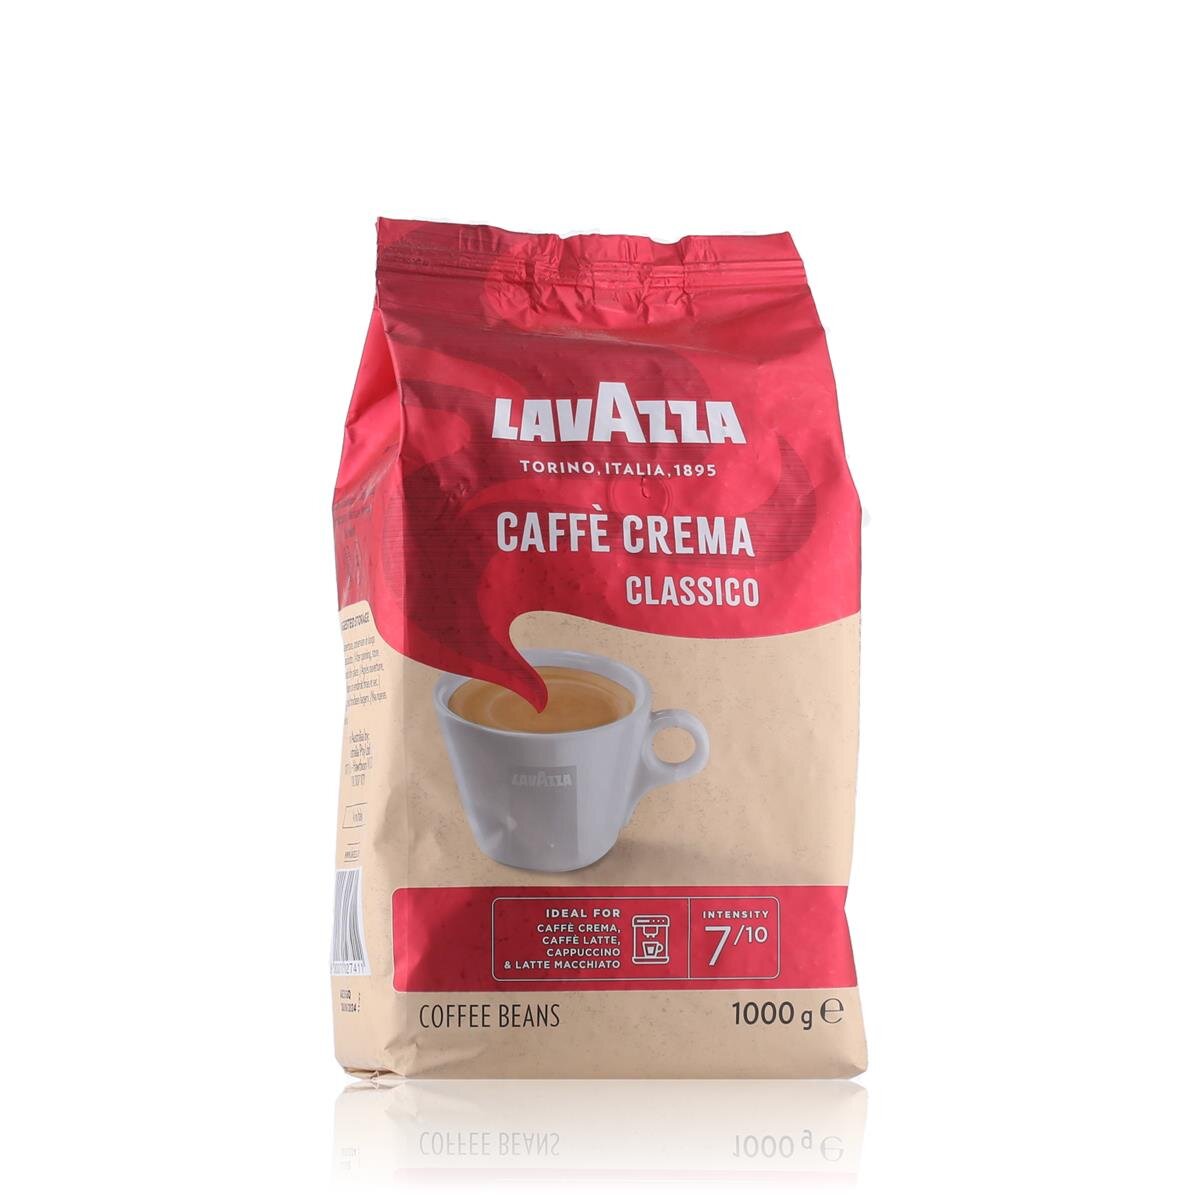 Lavazza Caffè Crema Classico 1kg, 7/10 € Bohnen 12,99 Kaffee ganze